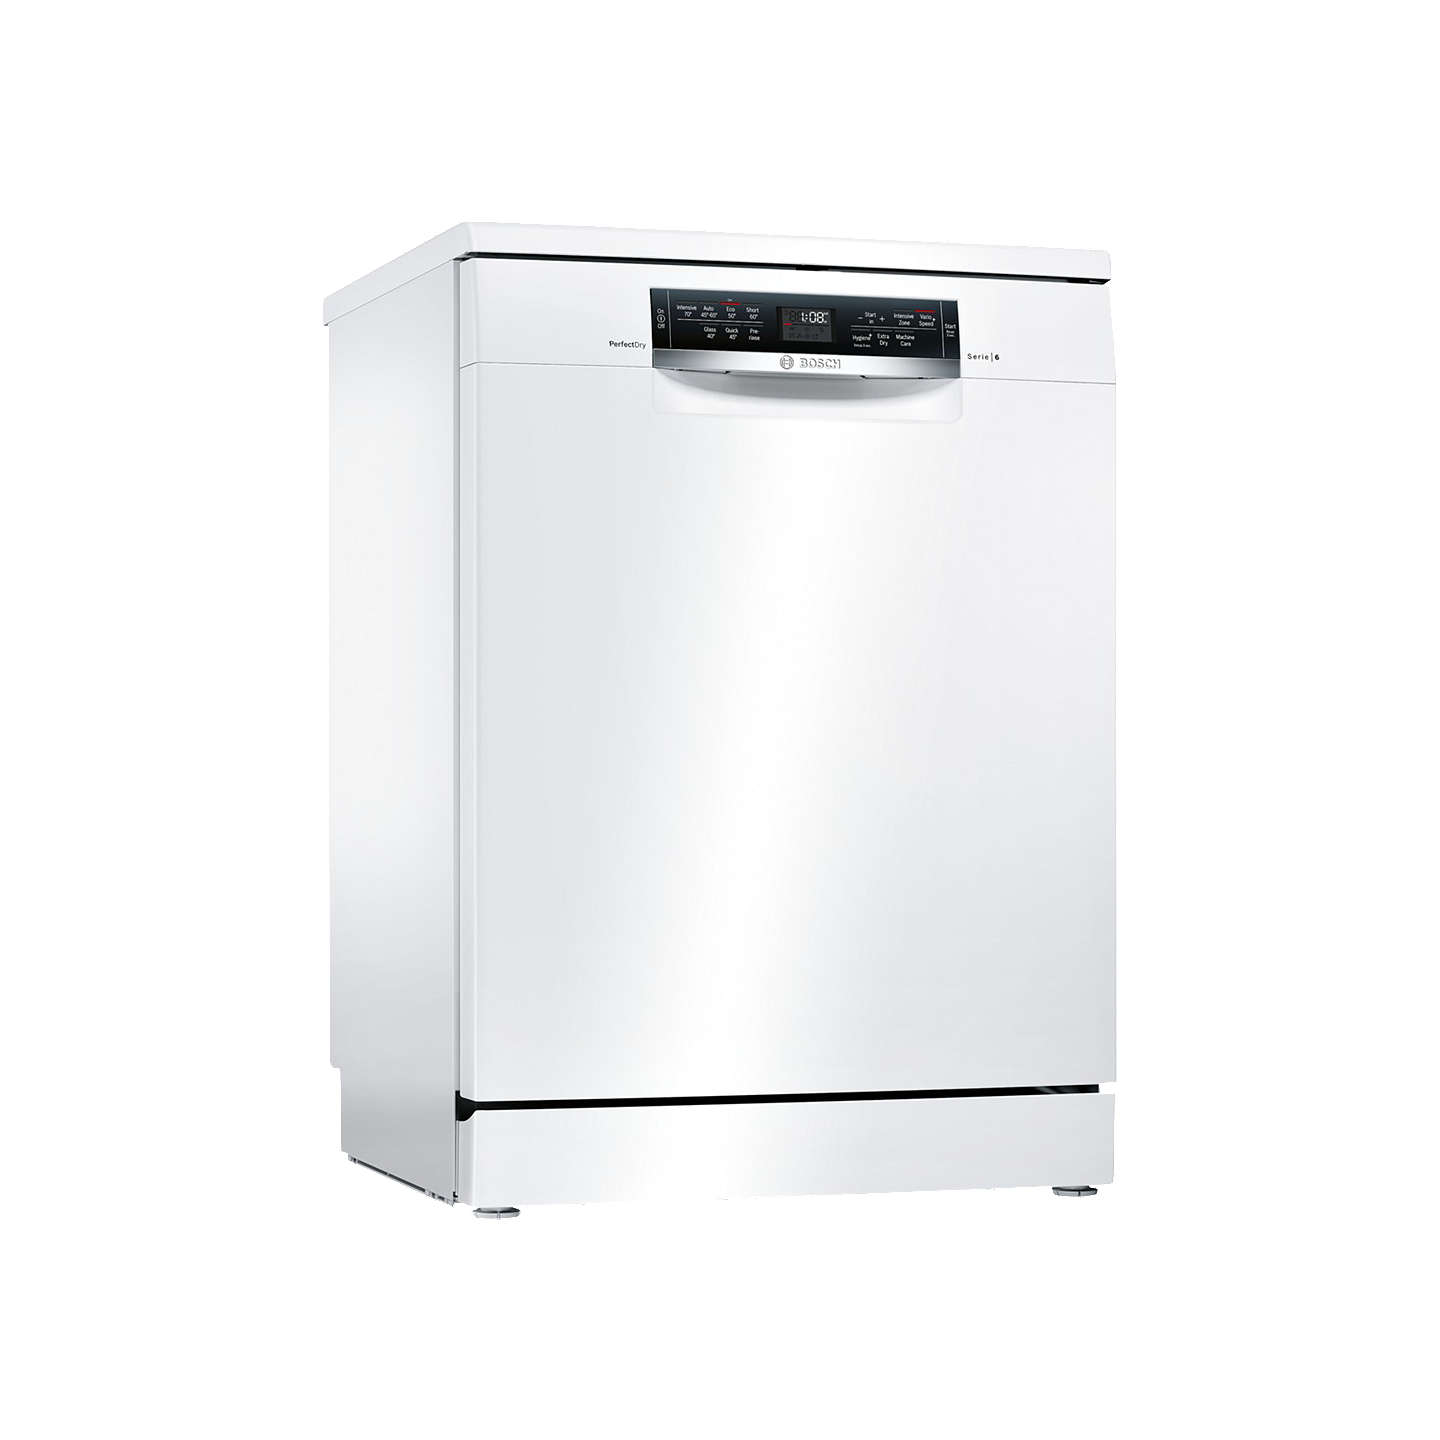 Bosch Perfect Dry Freestanding Dishwasher, White, SMS67MW10Q 